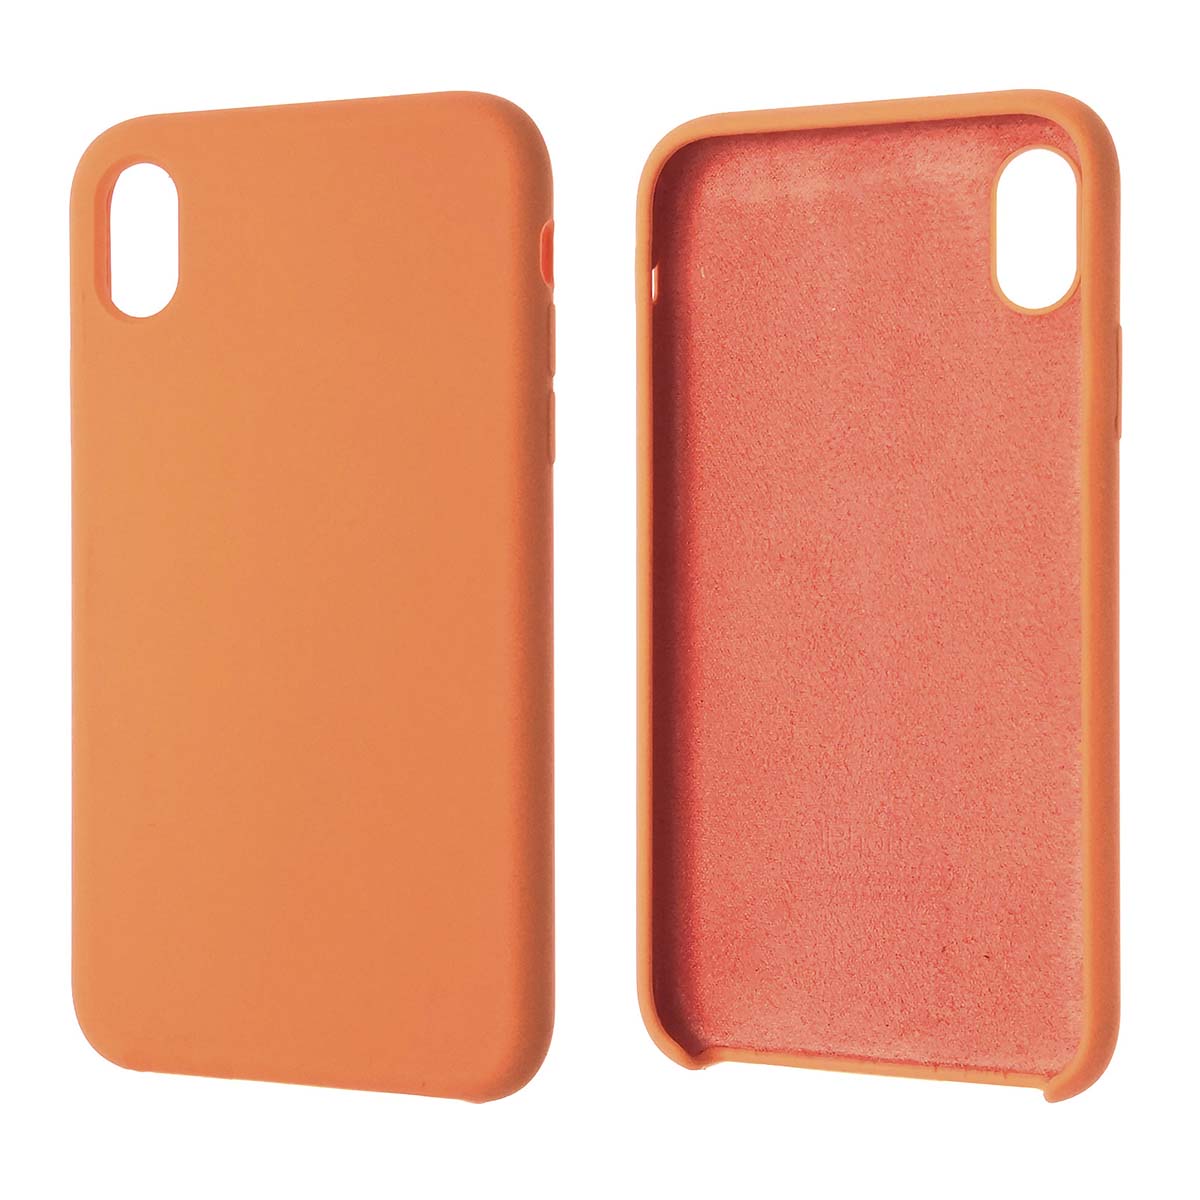 Чехол накладка Silicon Case для APPLE iPhone XR, силикон, бархат, цвет персиковый.